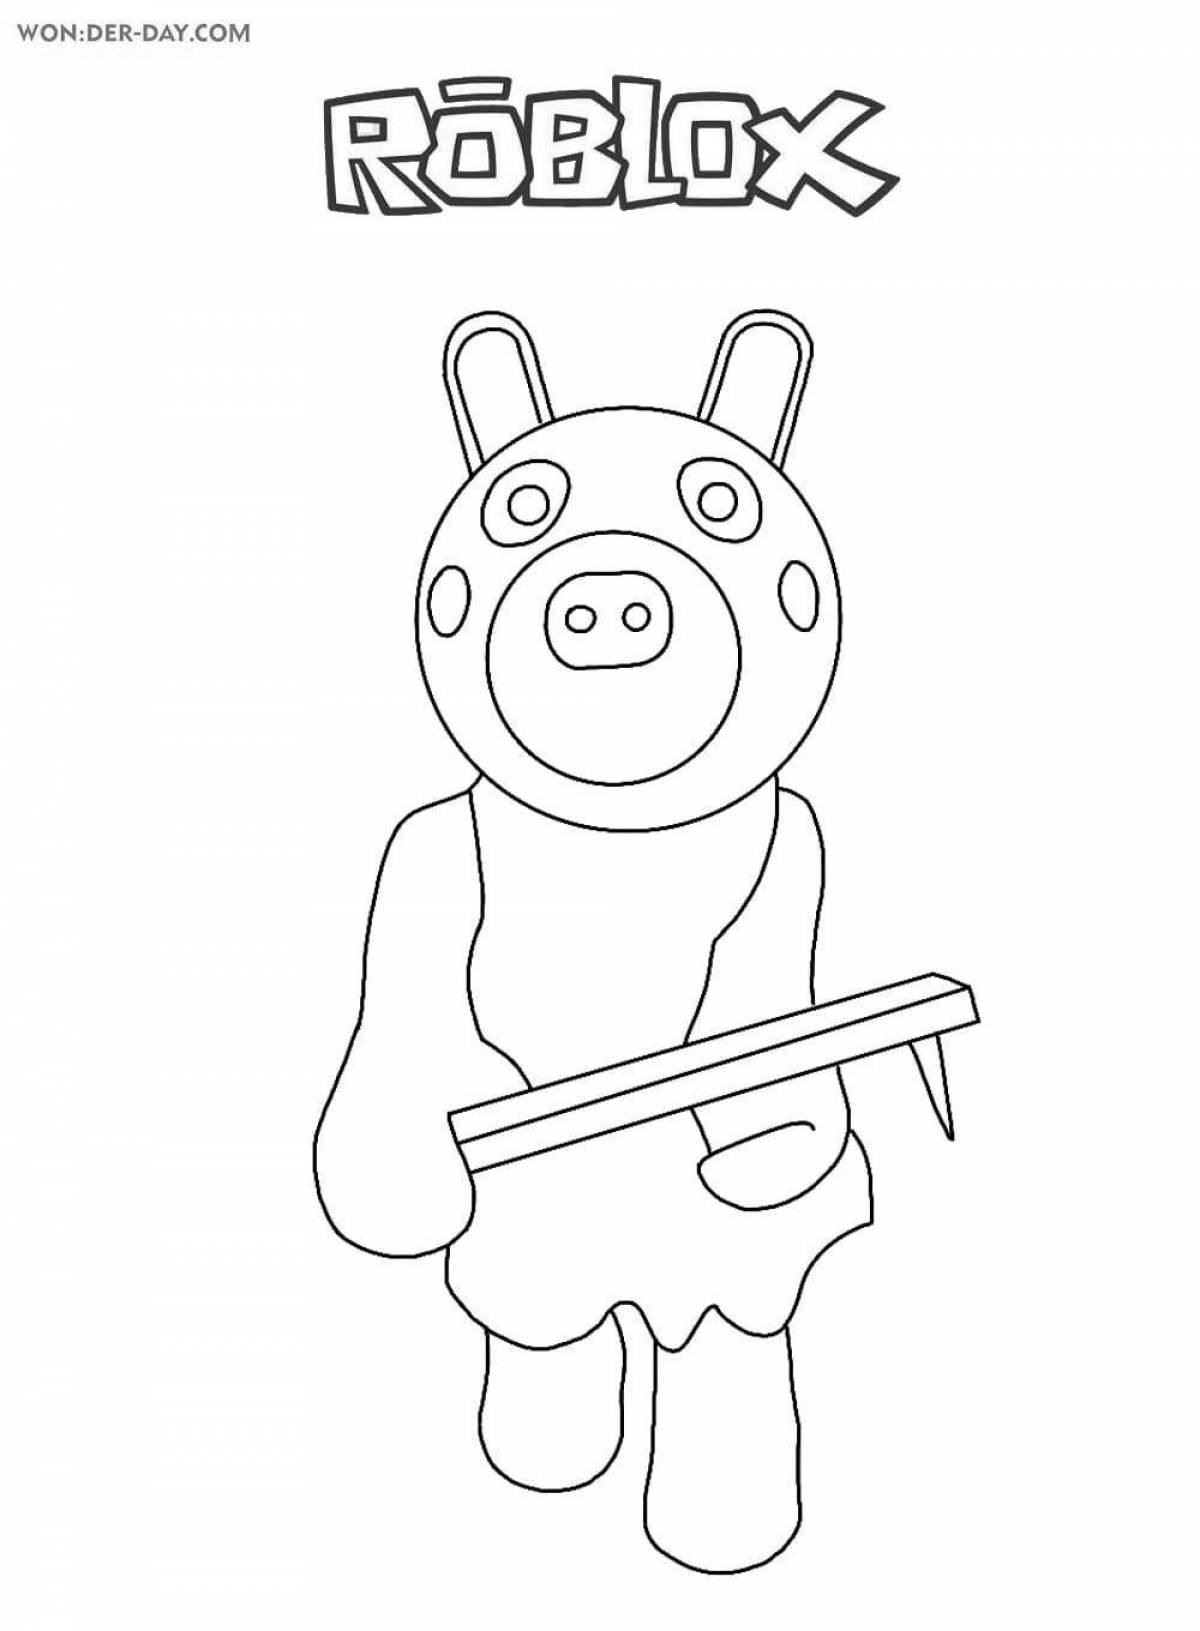 Веселая страница раскраски свинки roblox